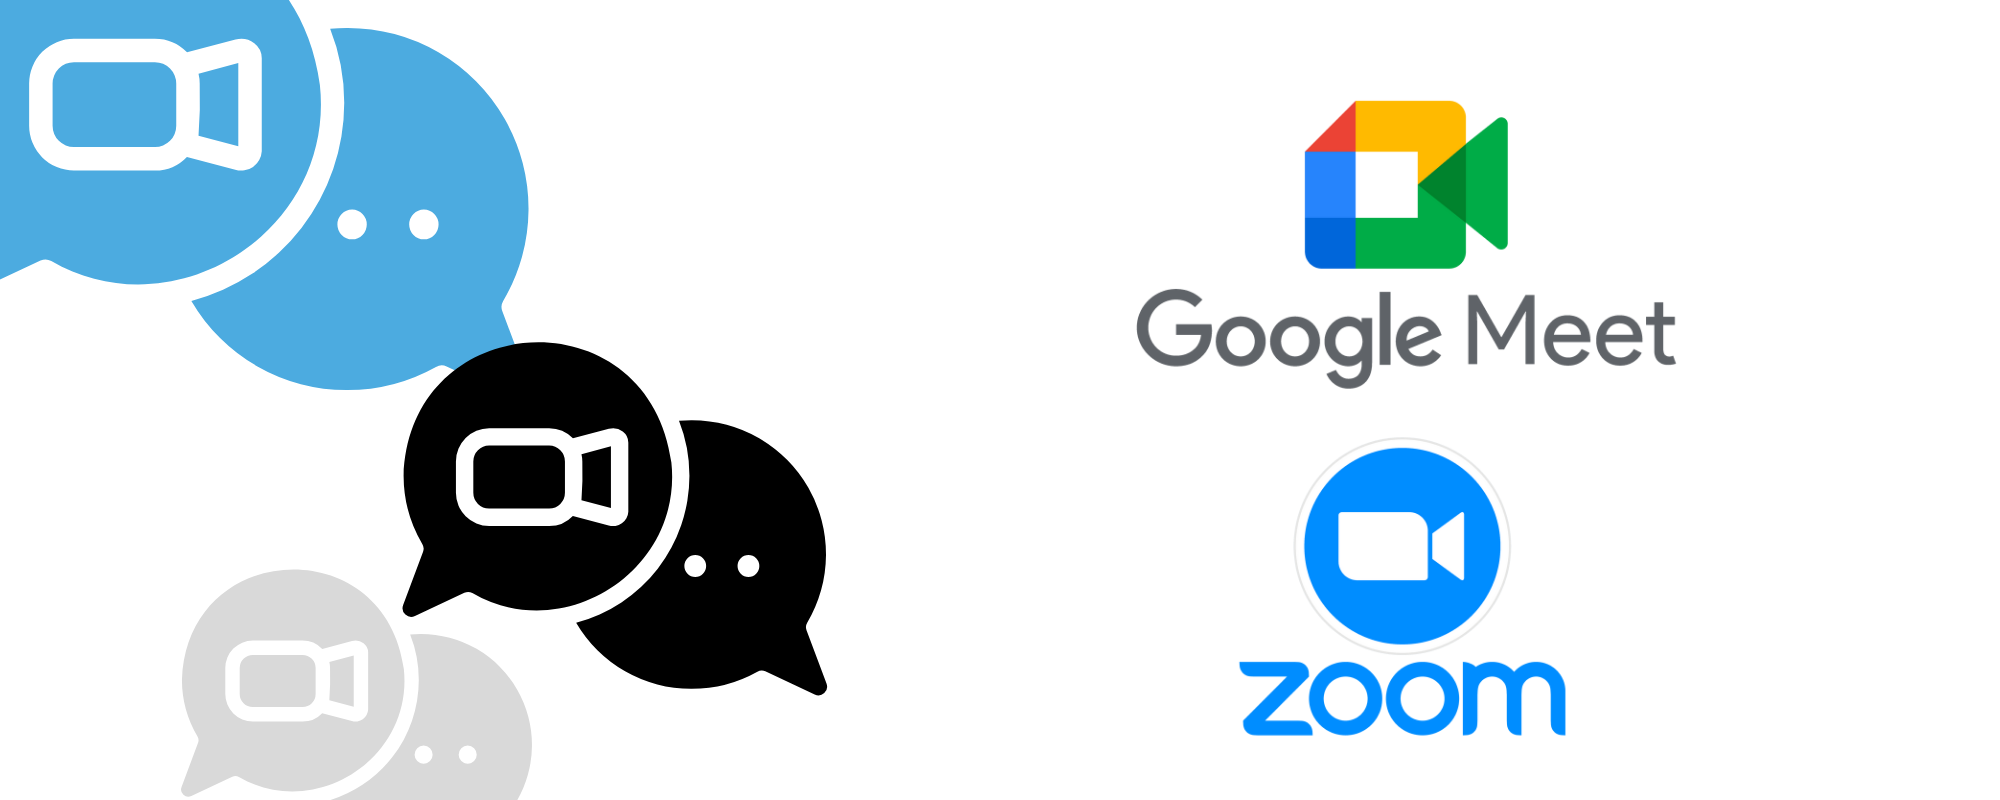 Google and Zoom logos